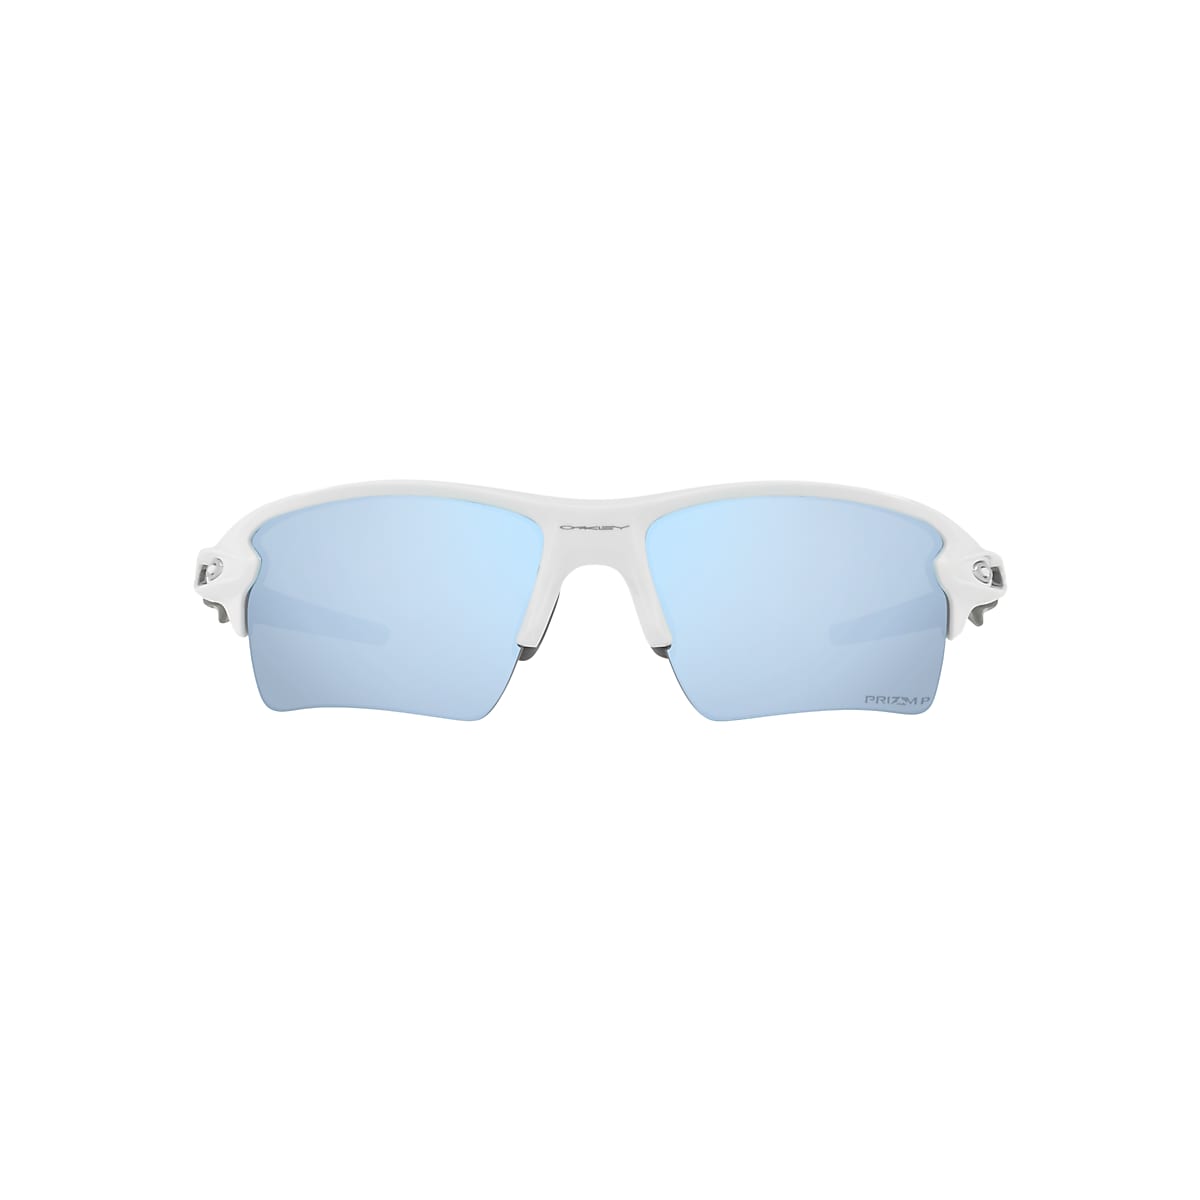 Oakley 0OO9188 Sunglasses in Clear/white | Target Optical